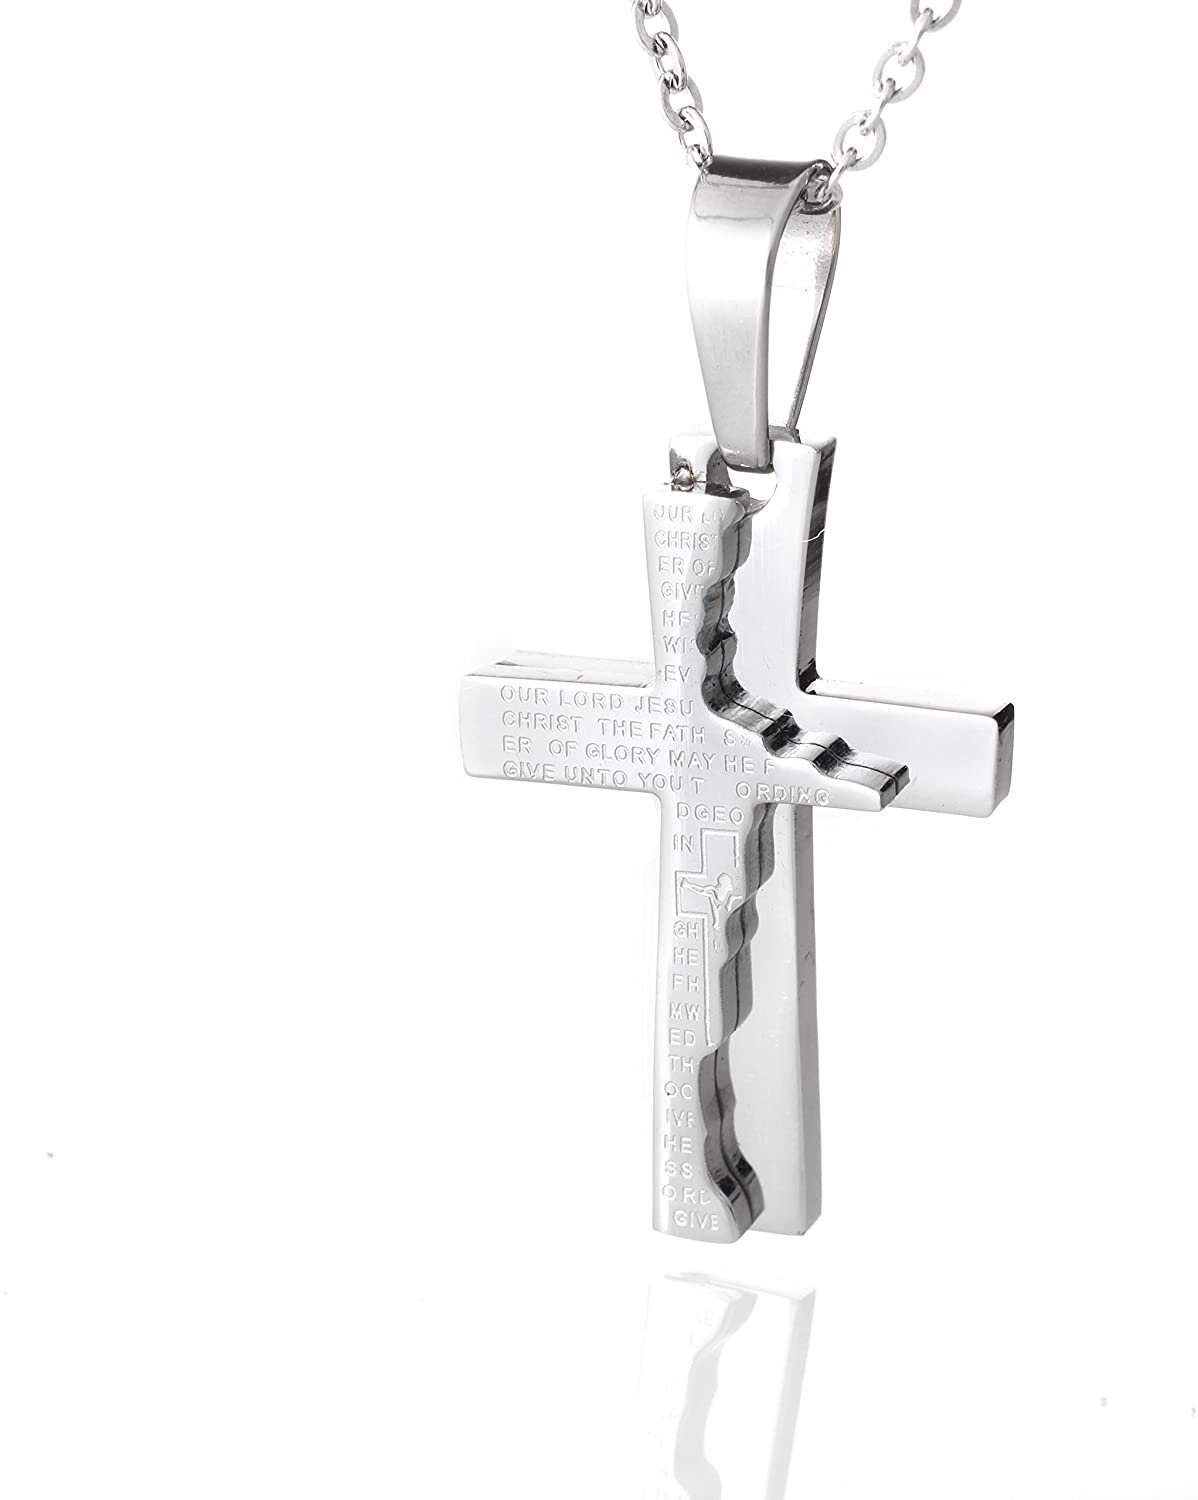 Karisma Kette mit Anhänger Karisma Edelstahl Kettenanhänger Kreuz Jesus "Our Lord" Unisex Edestahlkette - 50.0 Zentimeter